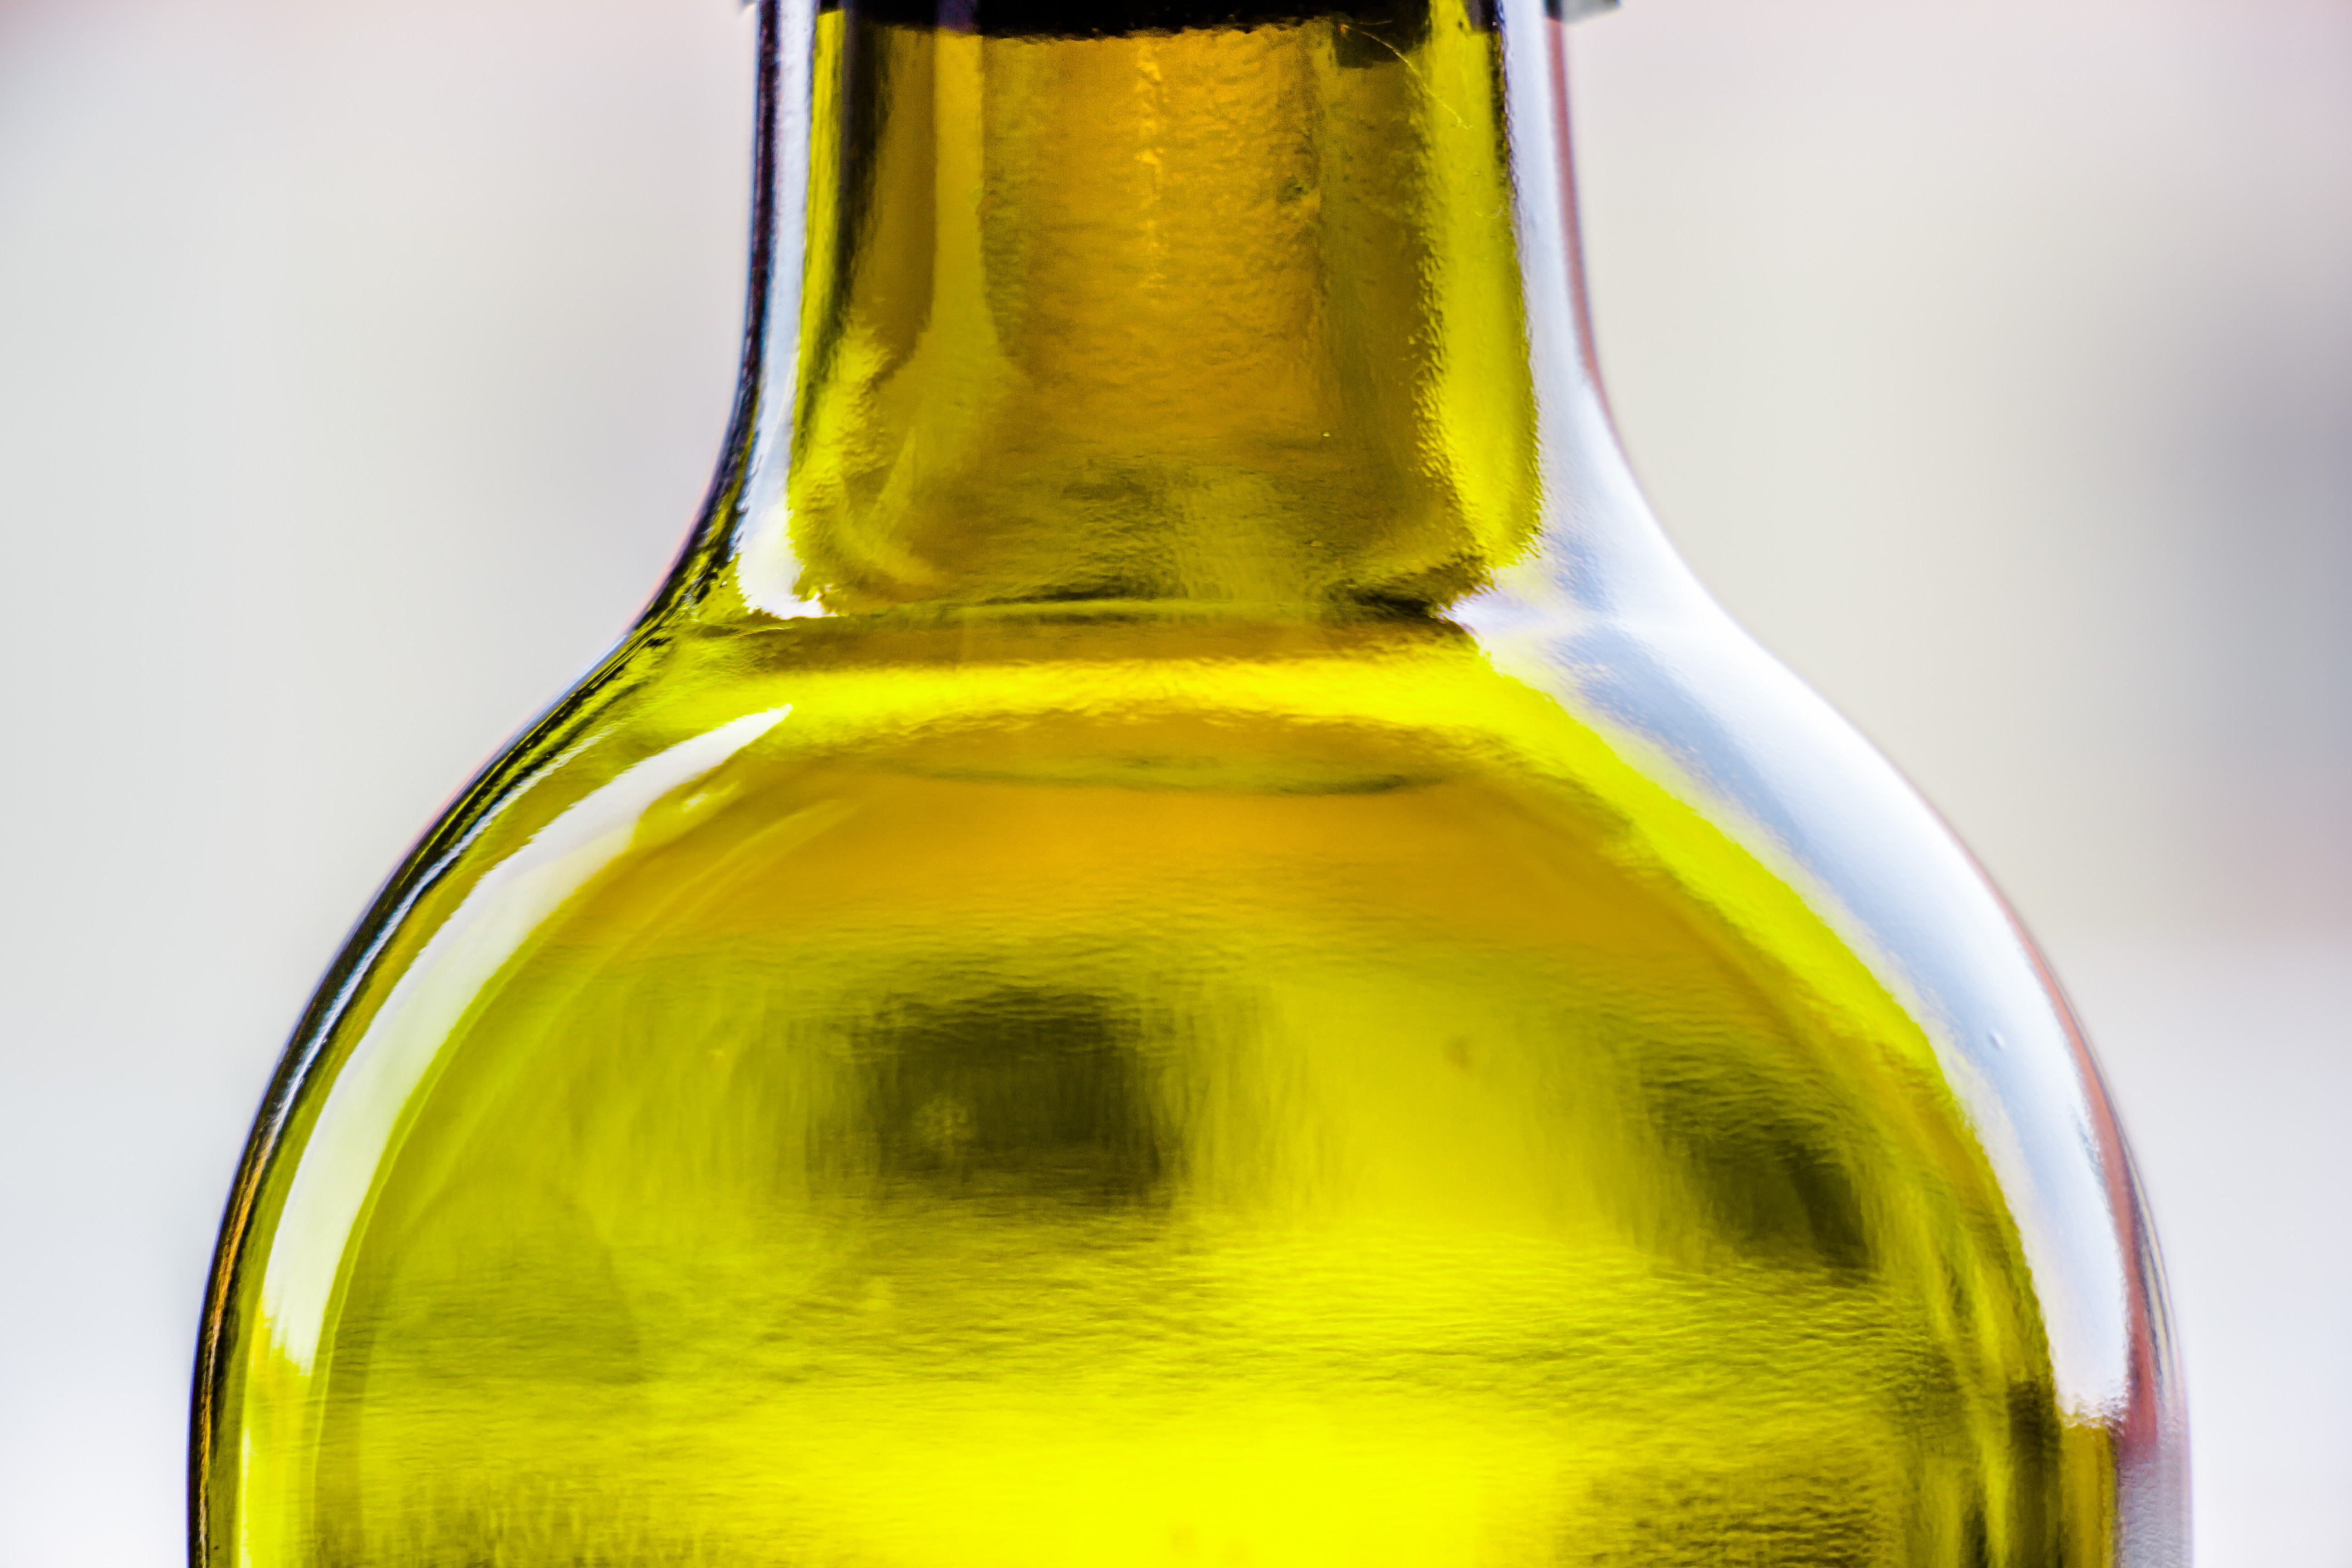 yellow translucent glass bottle